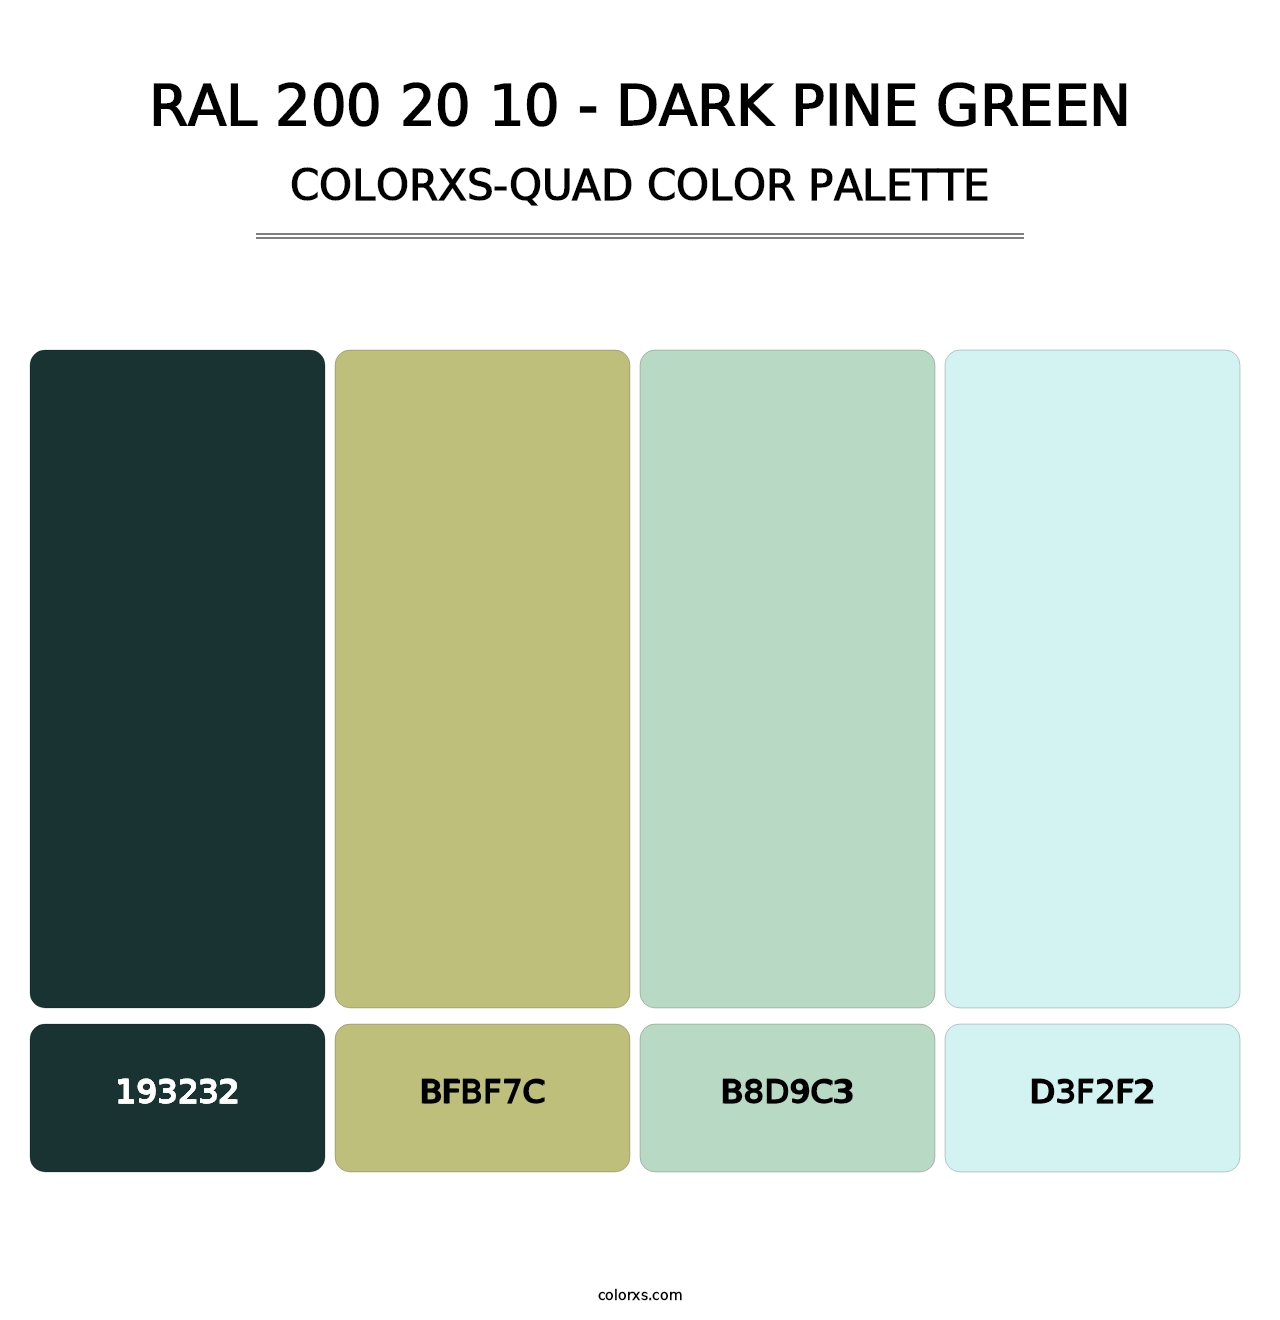 RAL 200 20 10 - Dark Pine Green - Colorxs Quad Palette